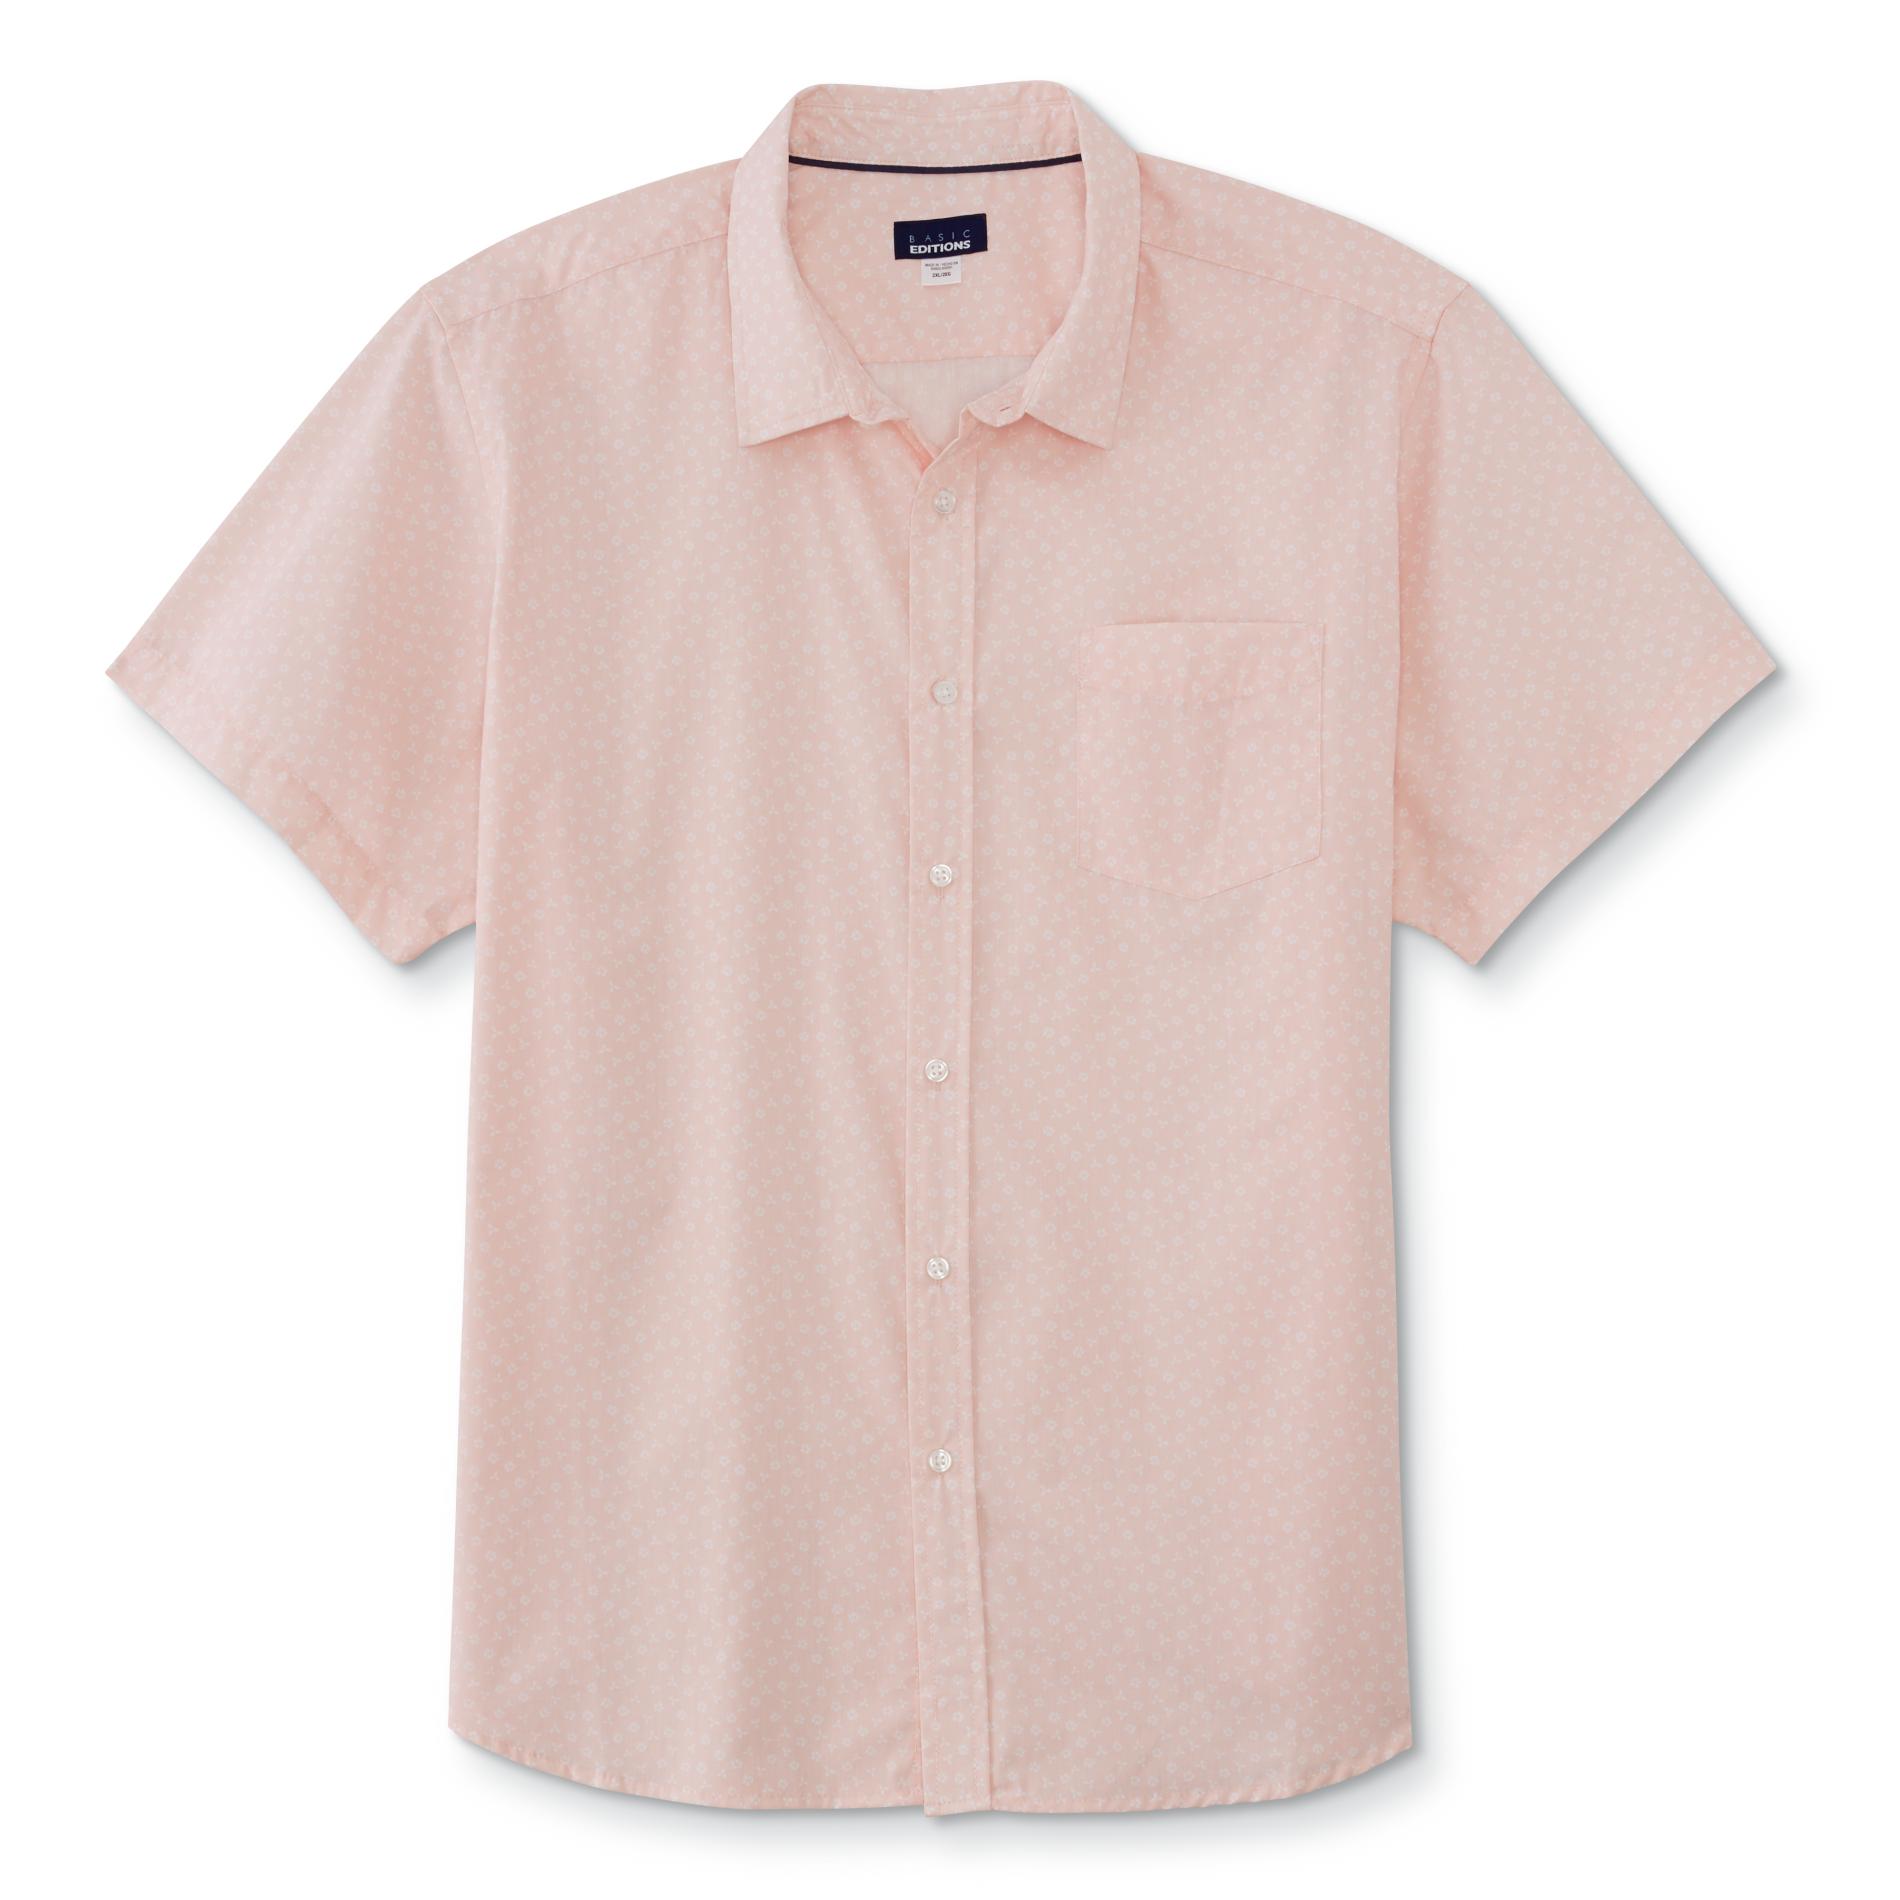 Basic Editions Men's Short-Sleeve Button-Front Shirt - Textured